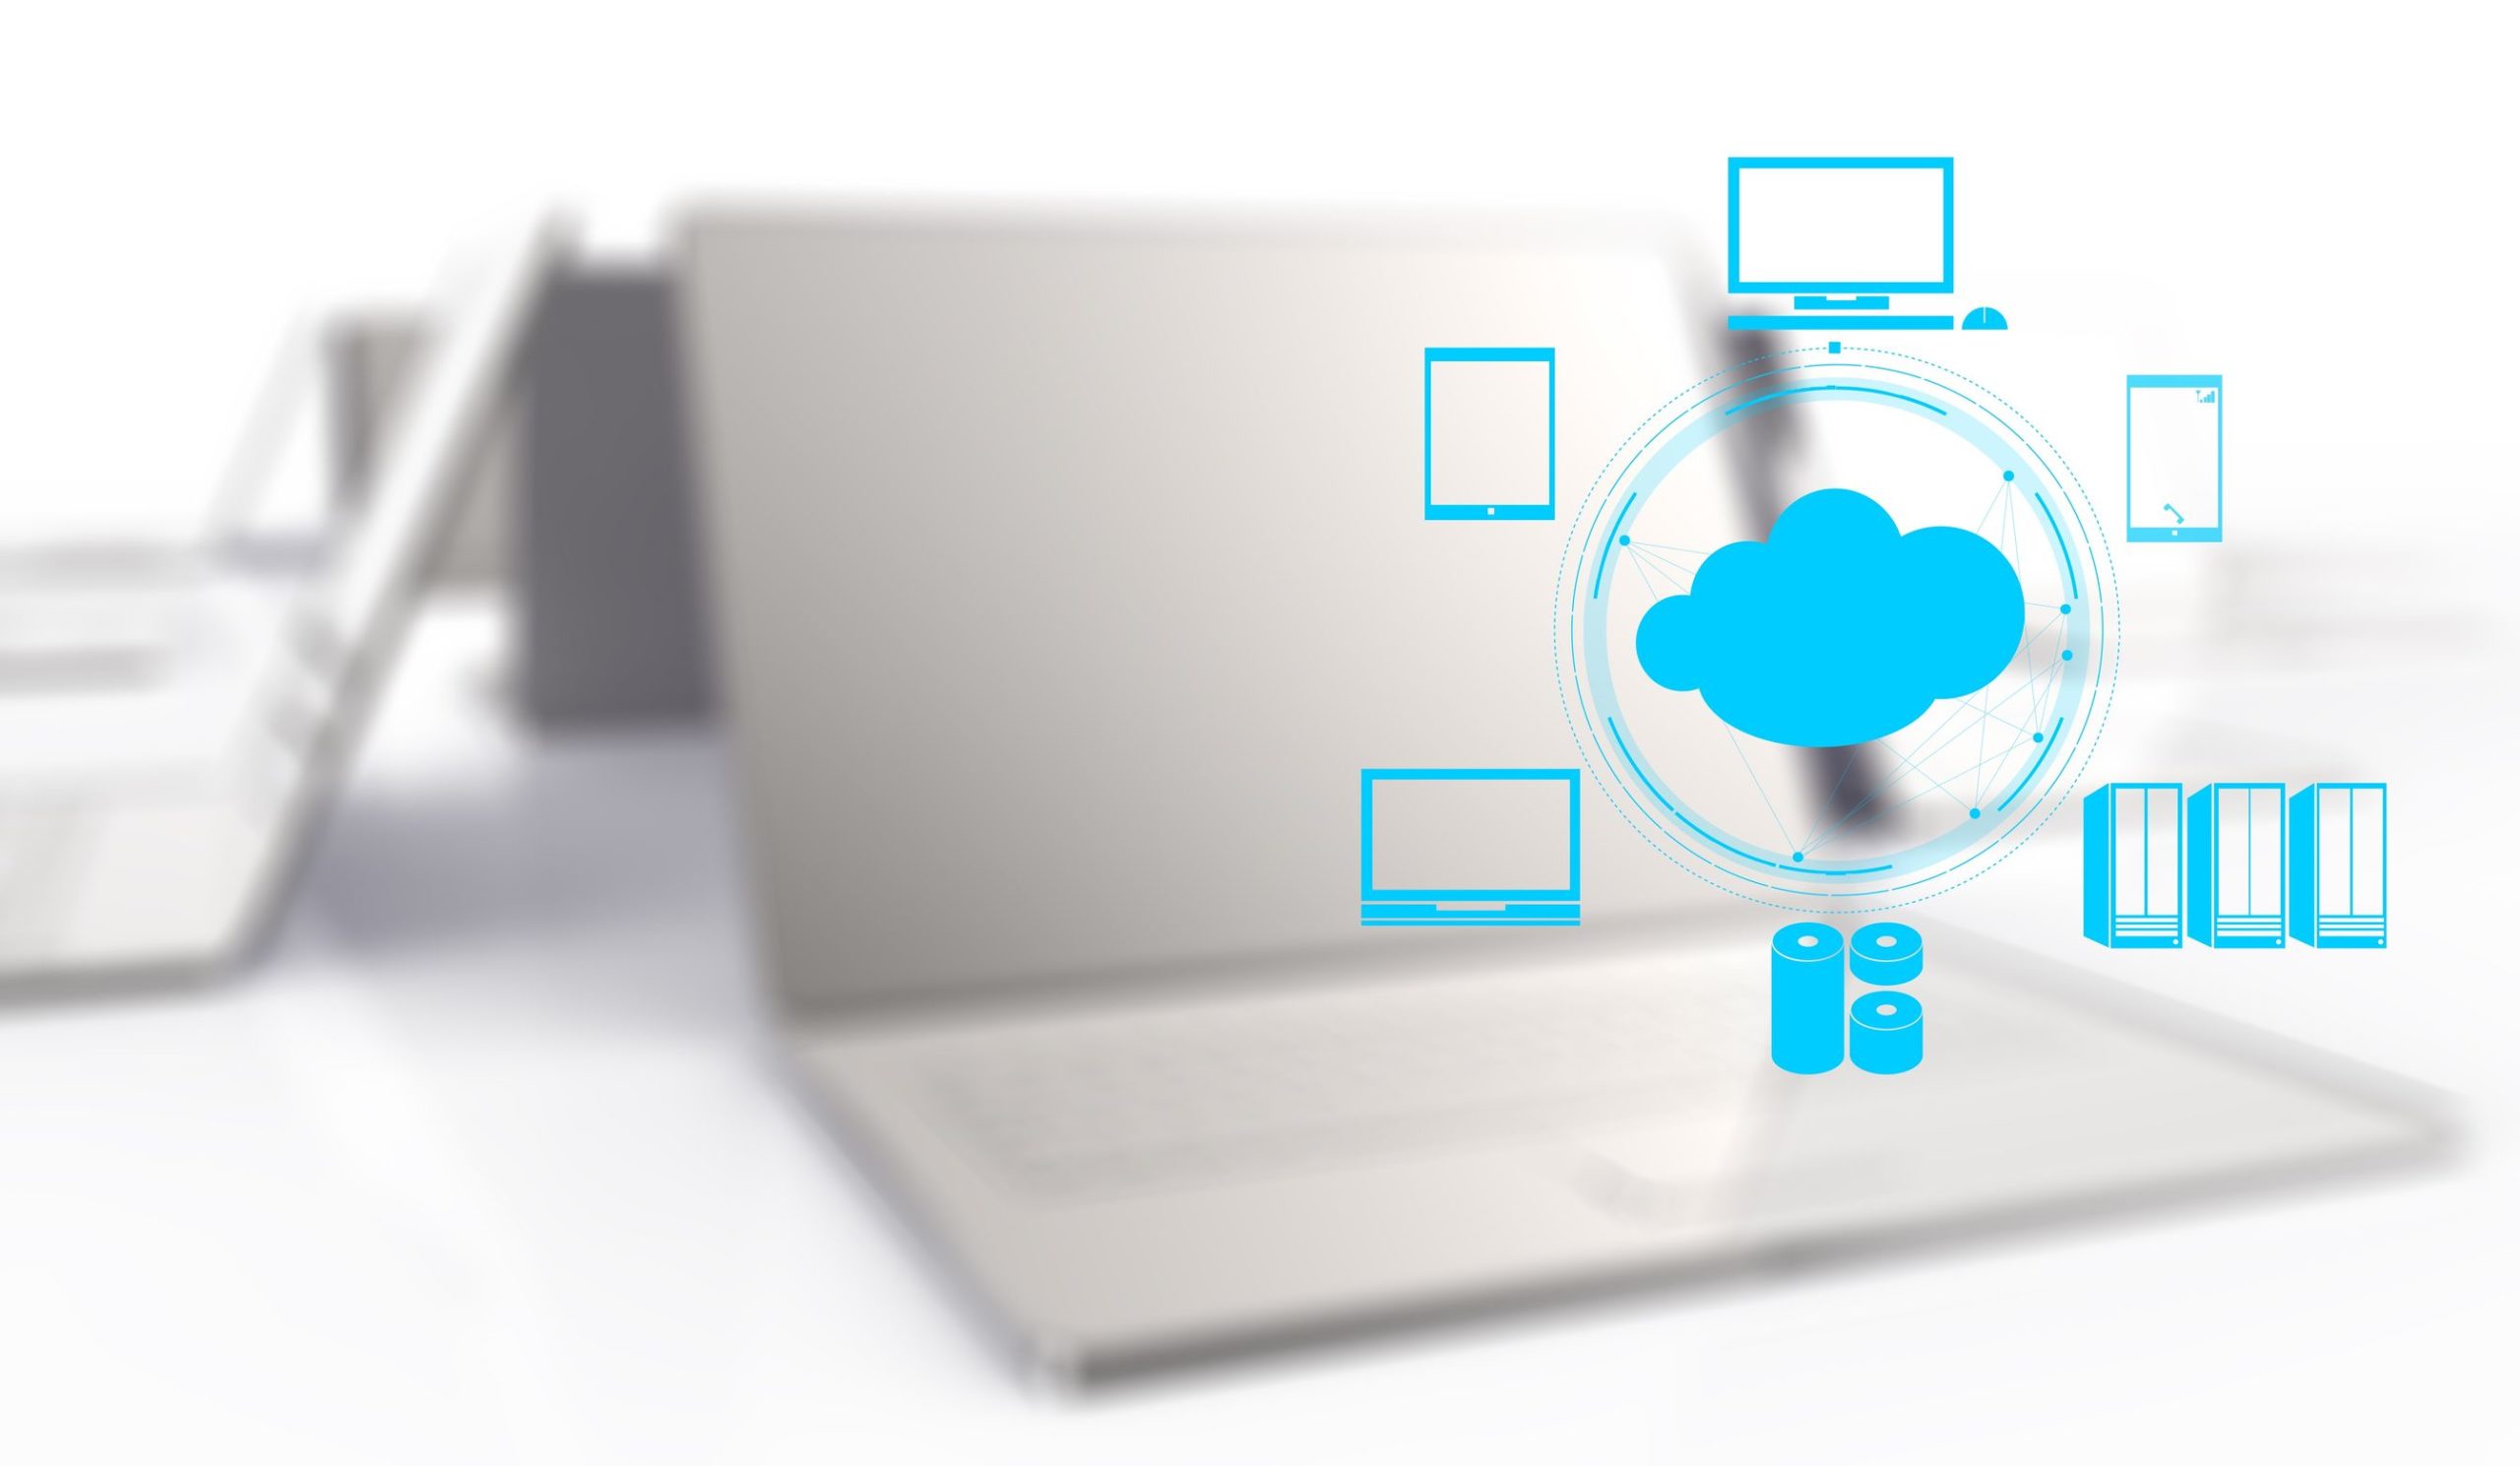 Cloud, at the heart of digital strategies